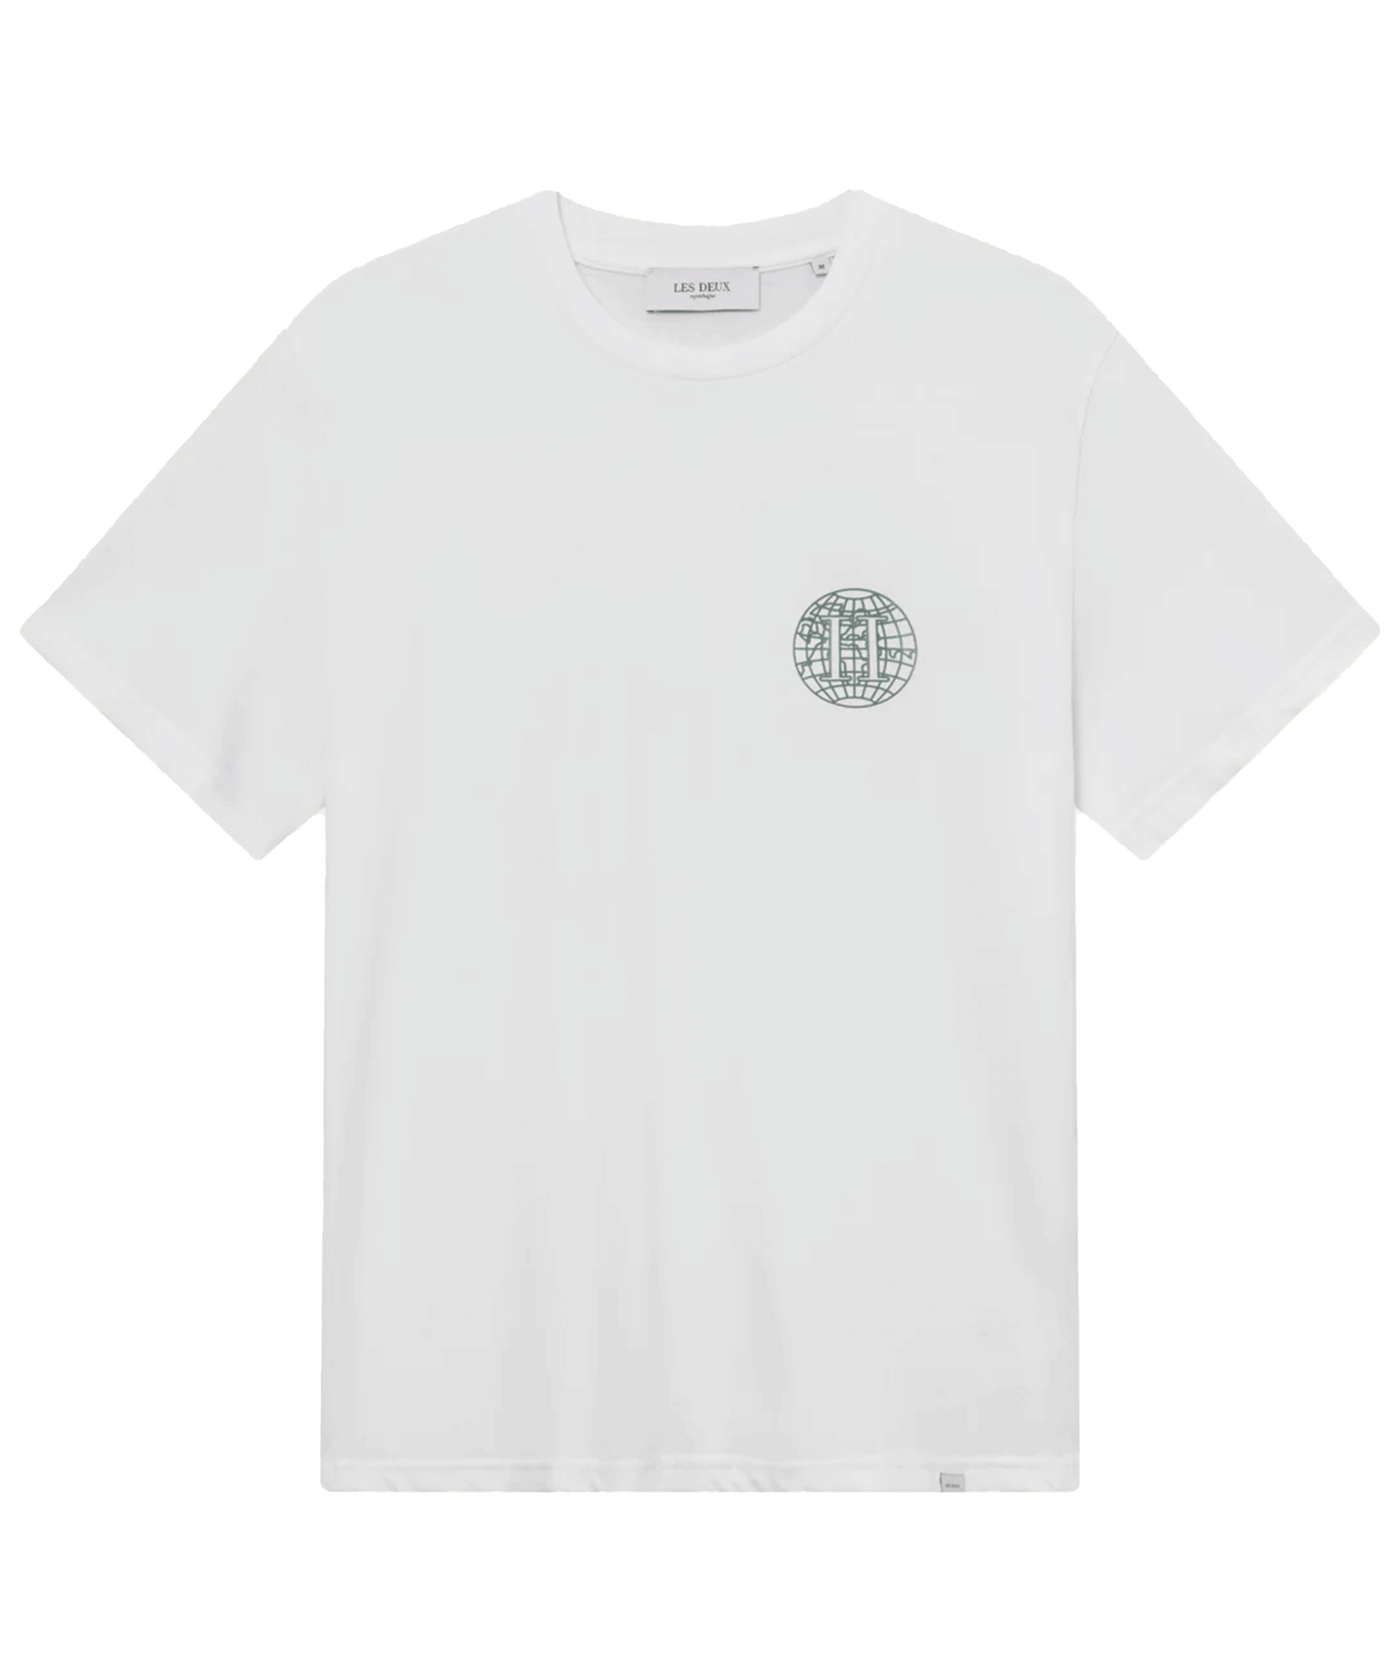 Les Deux - Ldm101164 - Globe T-shirt - White/dark Ivy Green